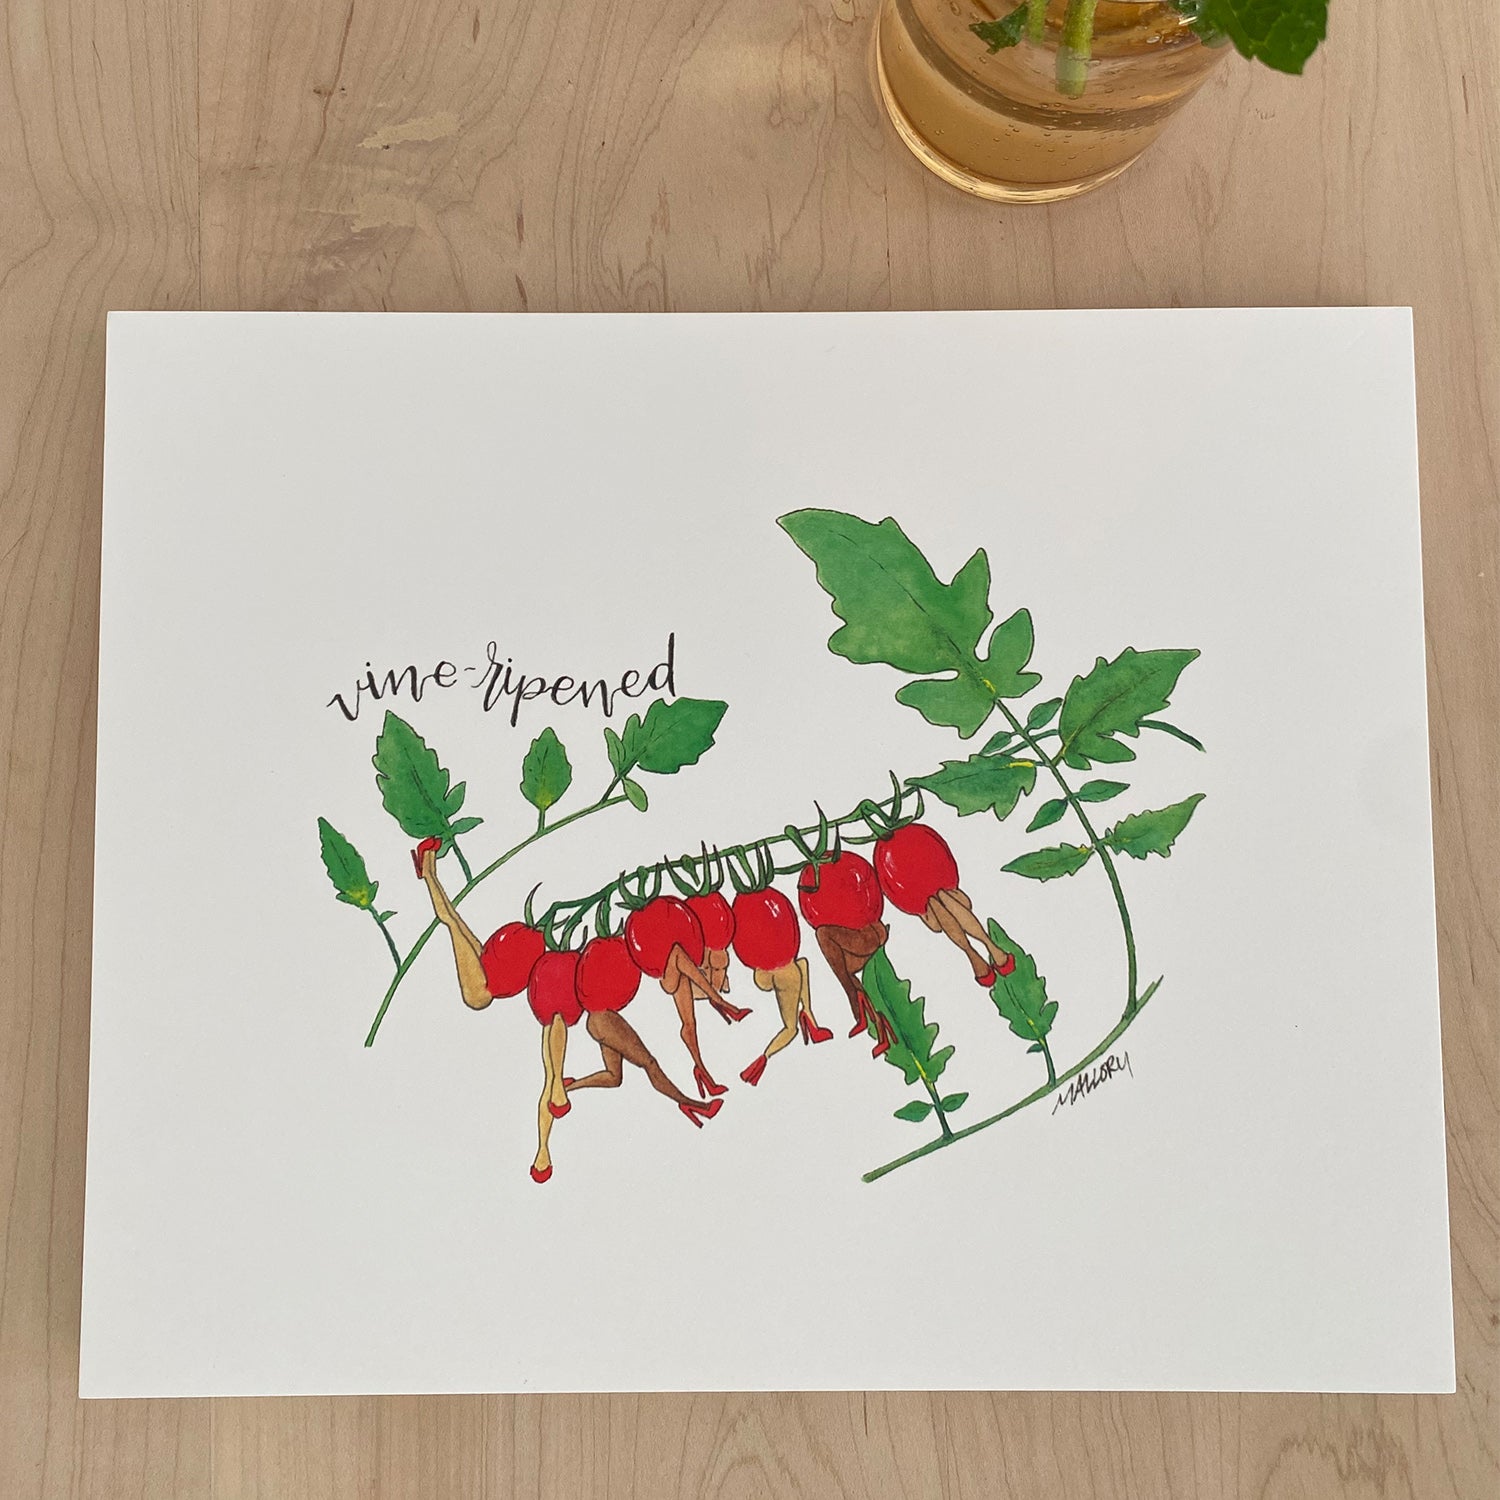 Vine-Ripened Tomatoes 8x10" Art Print